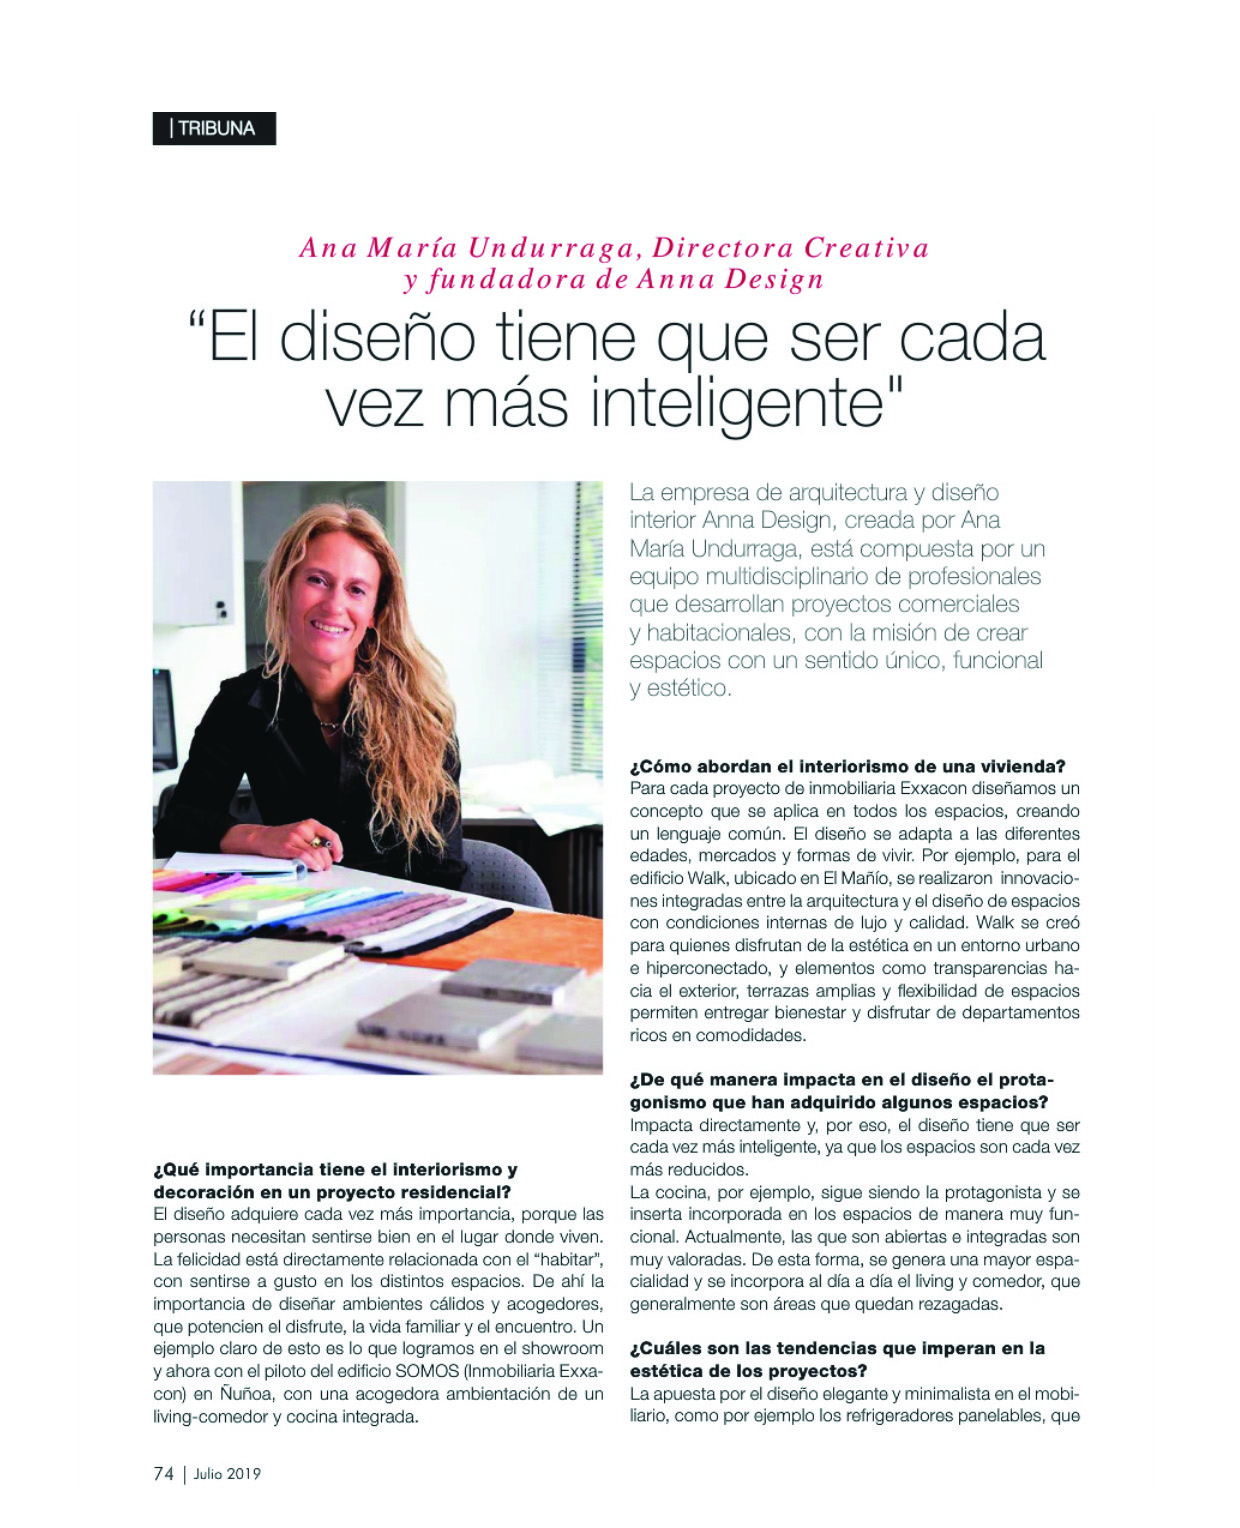 Microsoft Word - Informe Prensa 12072019.docx